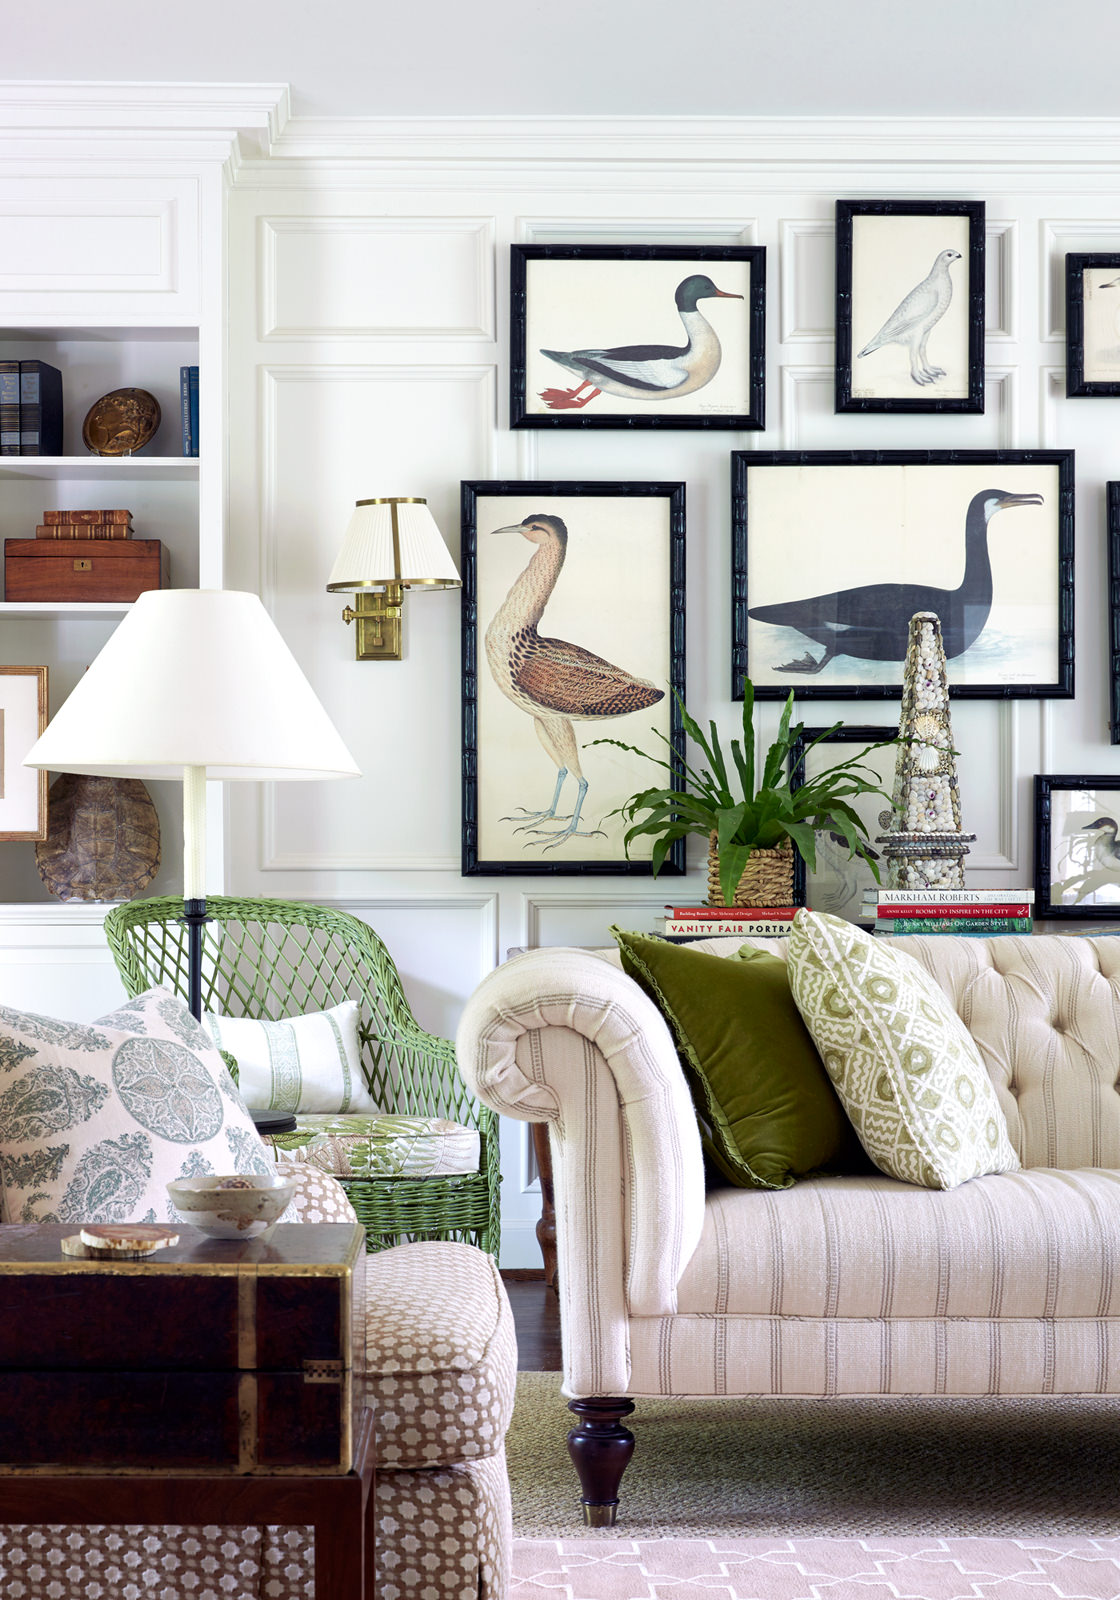 Décor Inspiration | At Home With: Interior Designer Sarah Bartholomew, Part 2